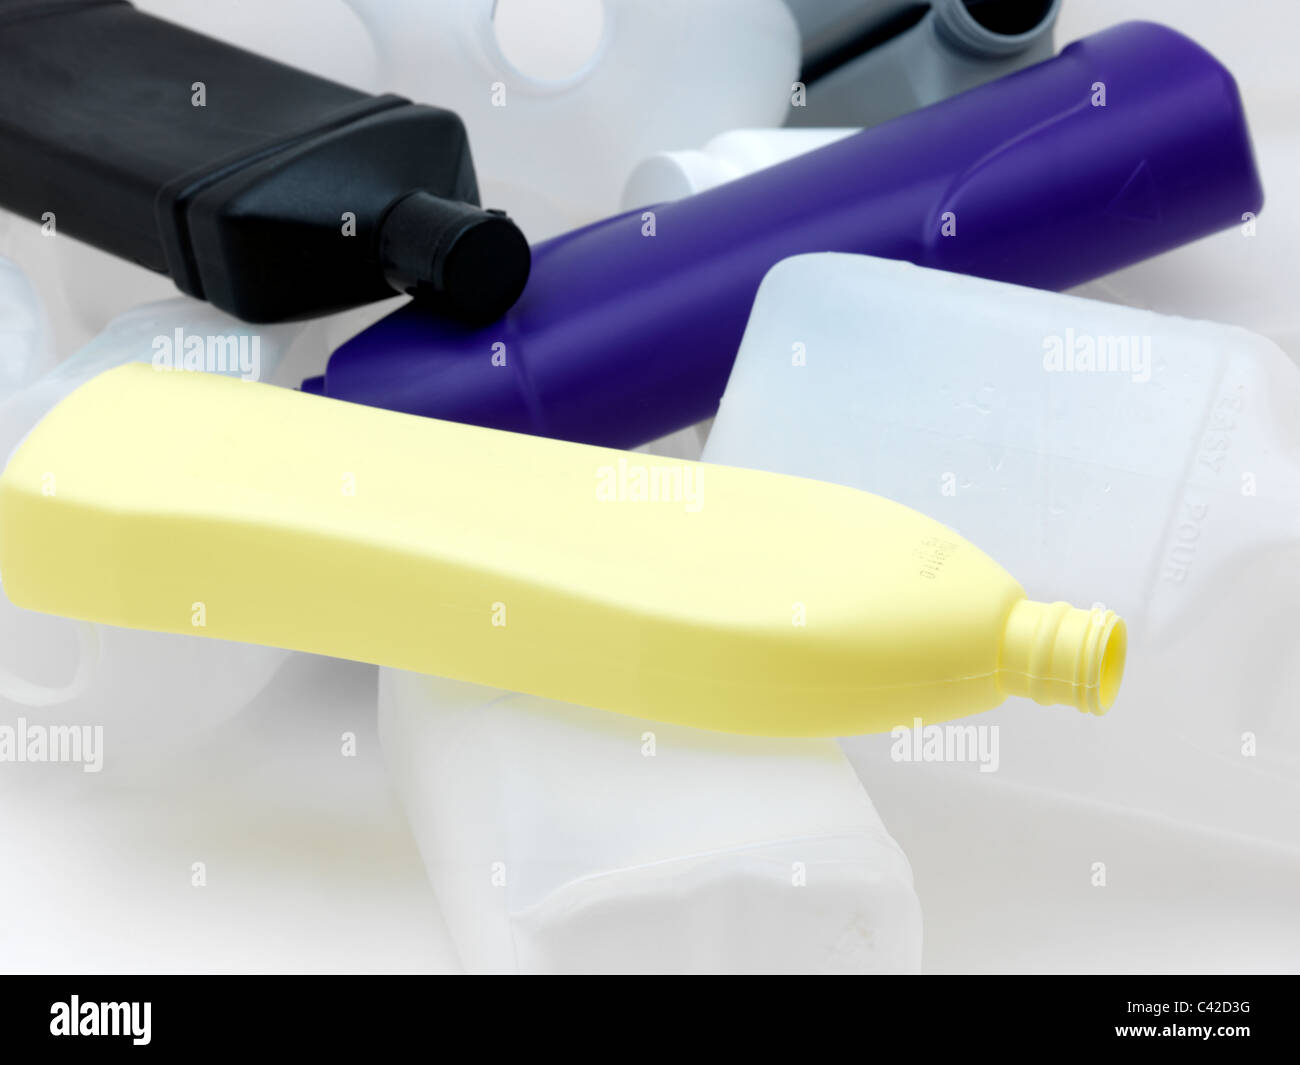 A Collection Of High-density polyethylene (HDPE) Plastics Stock Photo